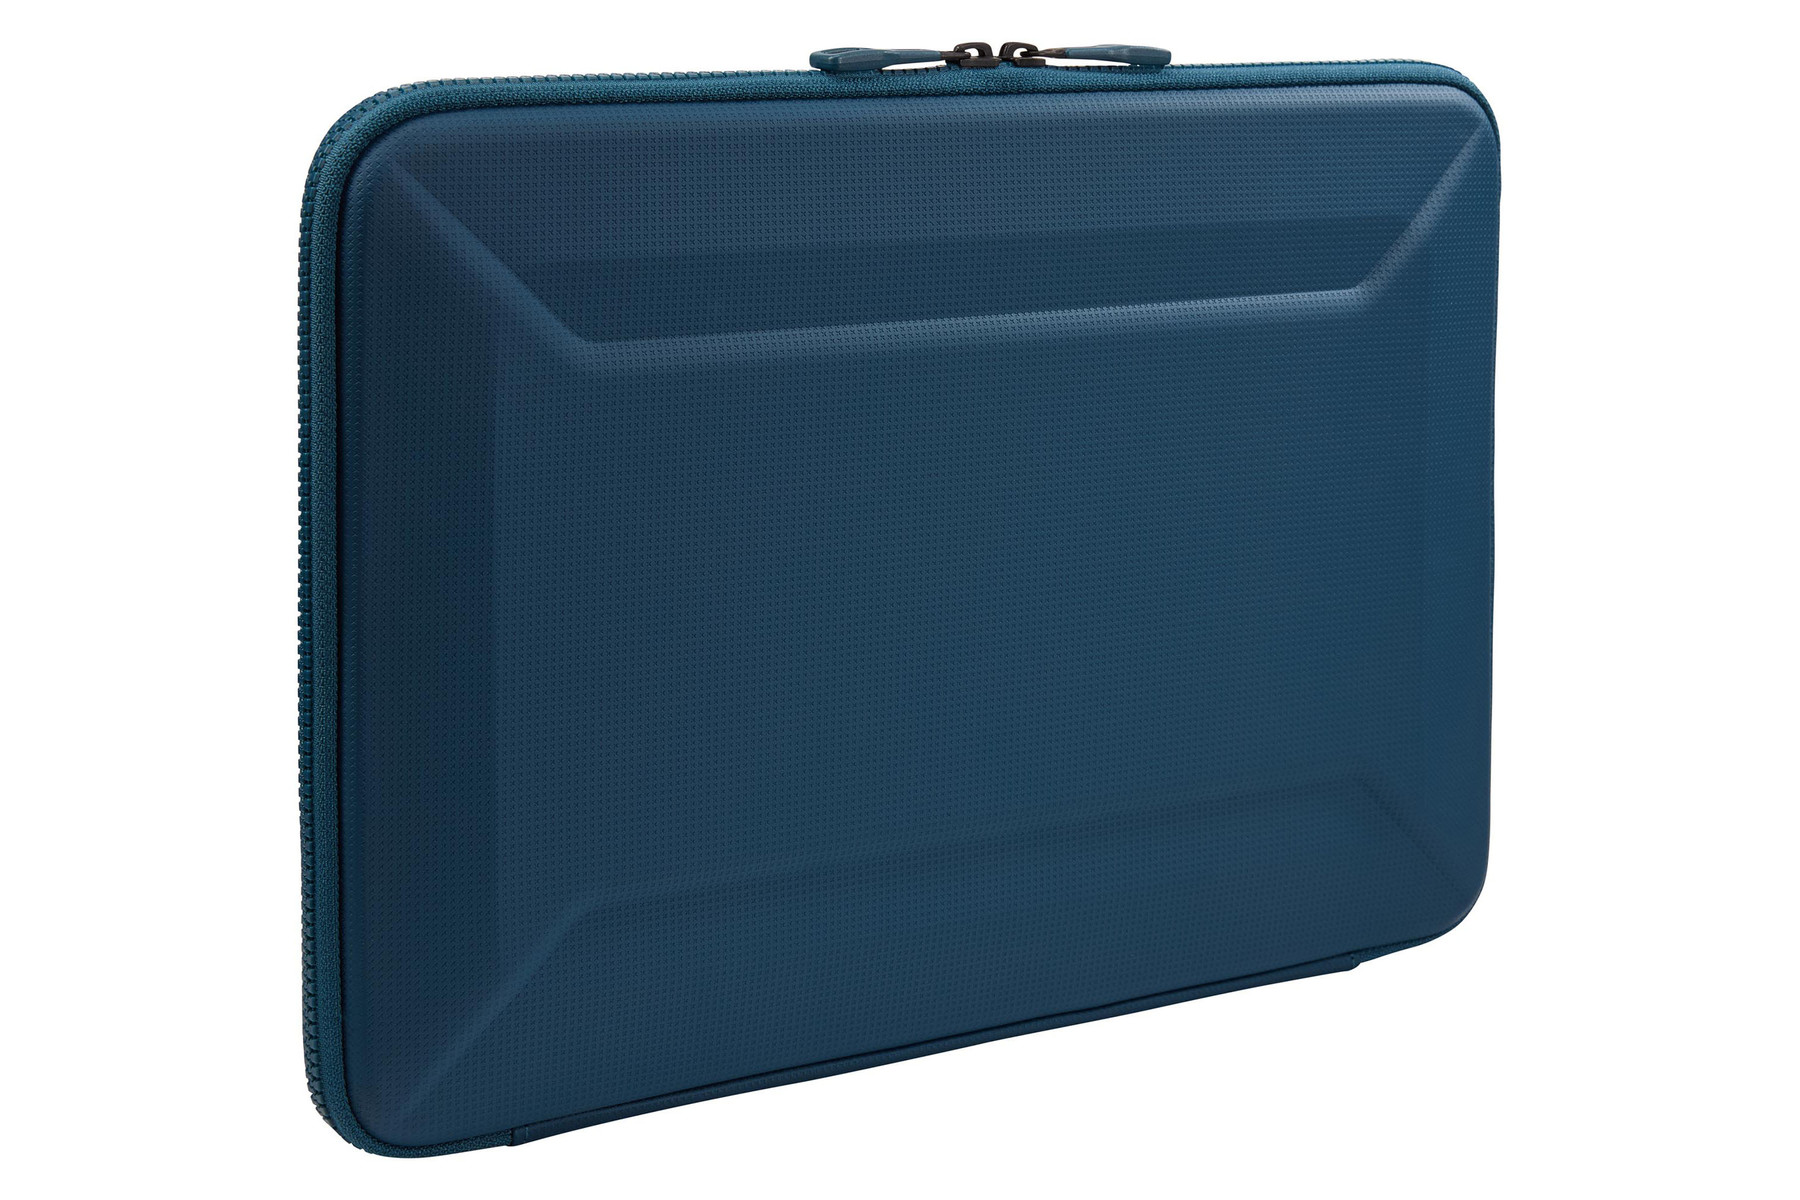 Чехол Thule 16-inch для MacBook Pro Gauntlet Sleeve Blue TGSE2357BLU / 3204524 сумка чехол для ноутбука защитный чехол на плечо для pro 13 14 15 6 дюймов сумка для macbook air asus lenovo dell huawei